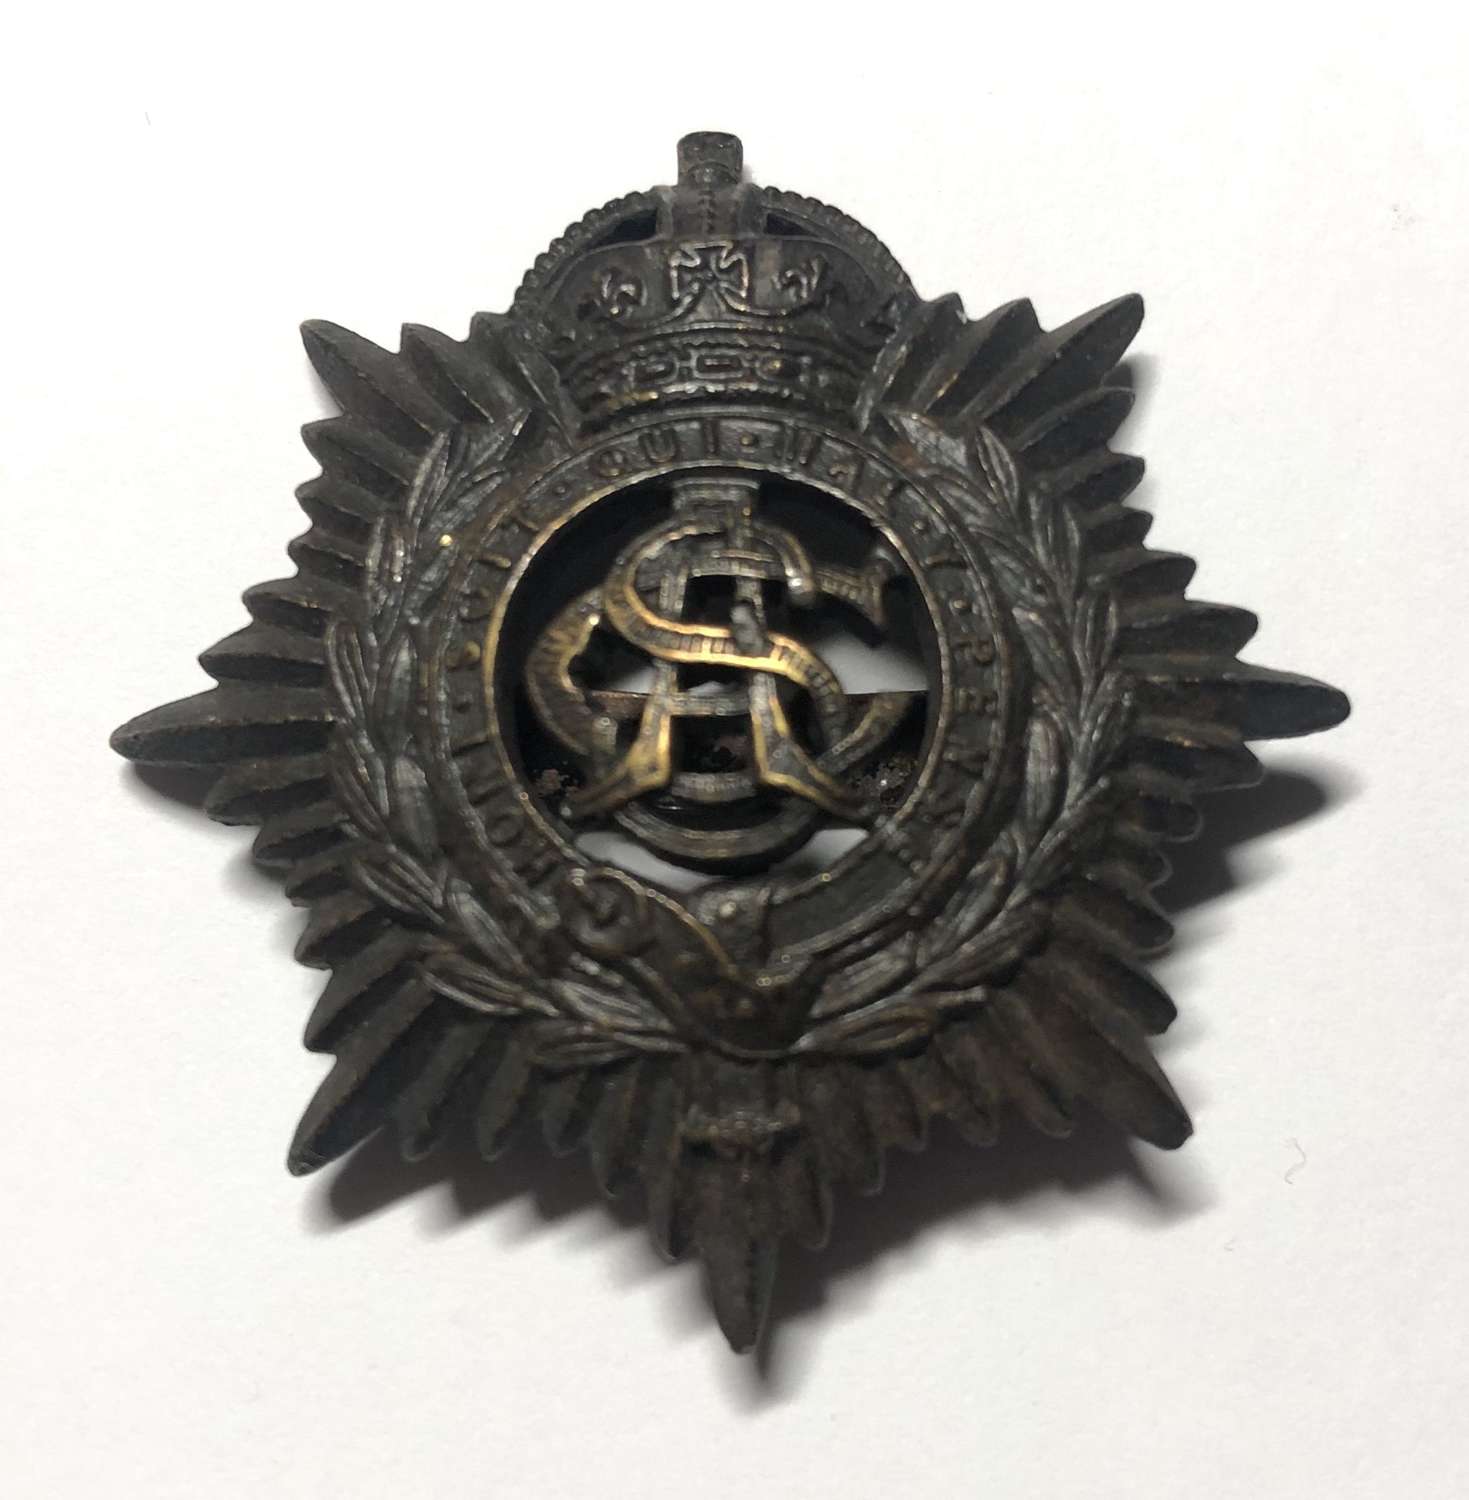 Army Service Corps WW1 OSD cap badge by J.R. Gaunt, London